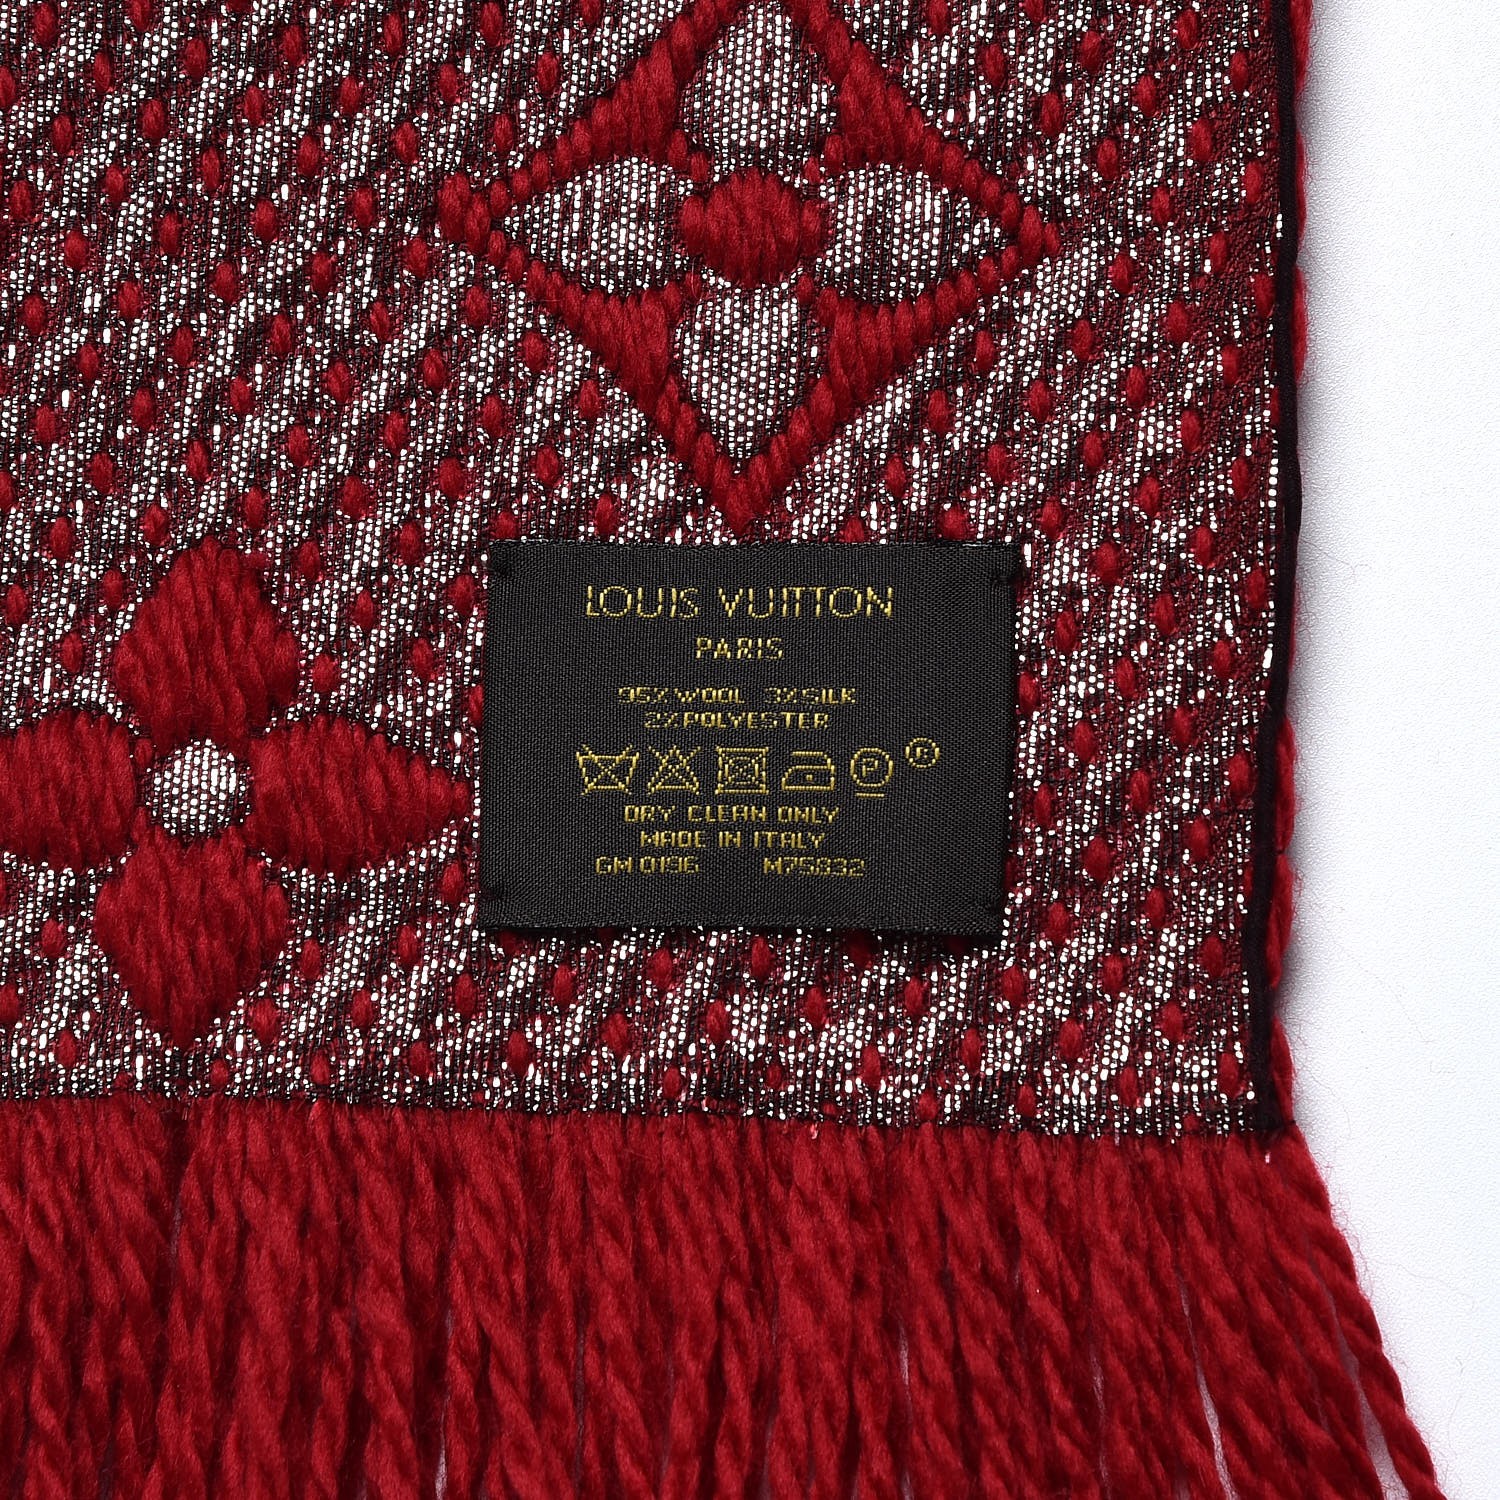 NEW LV Wool Logomania Shine Scarf 100% Authentic M70466 Louis